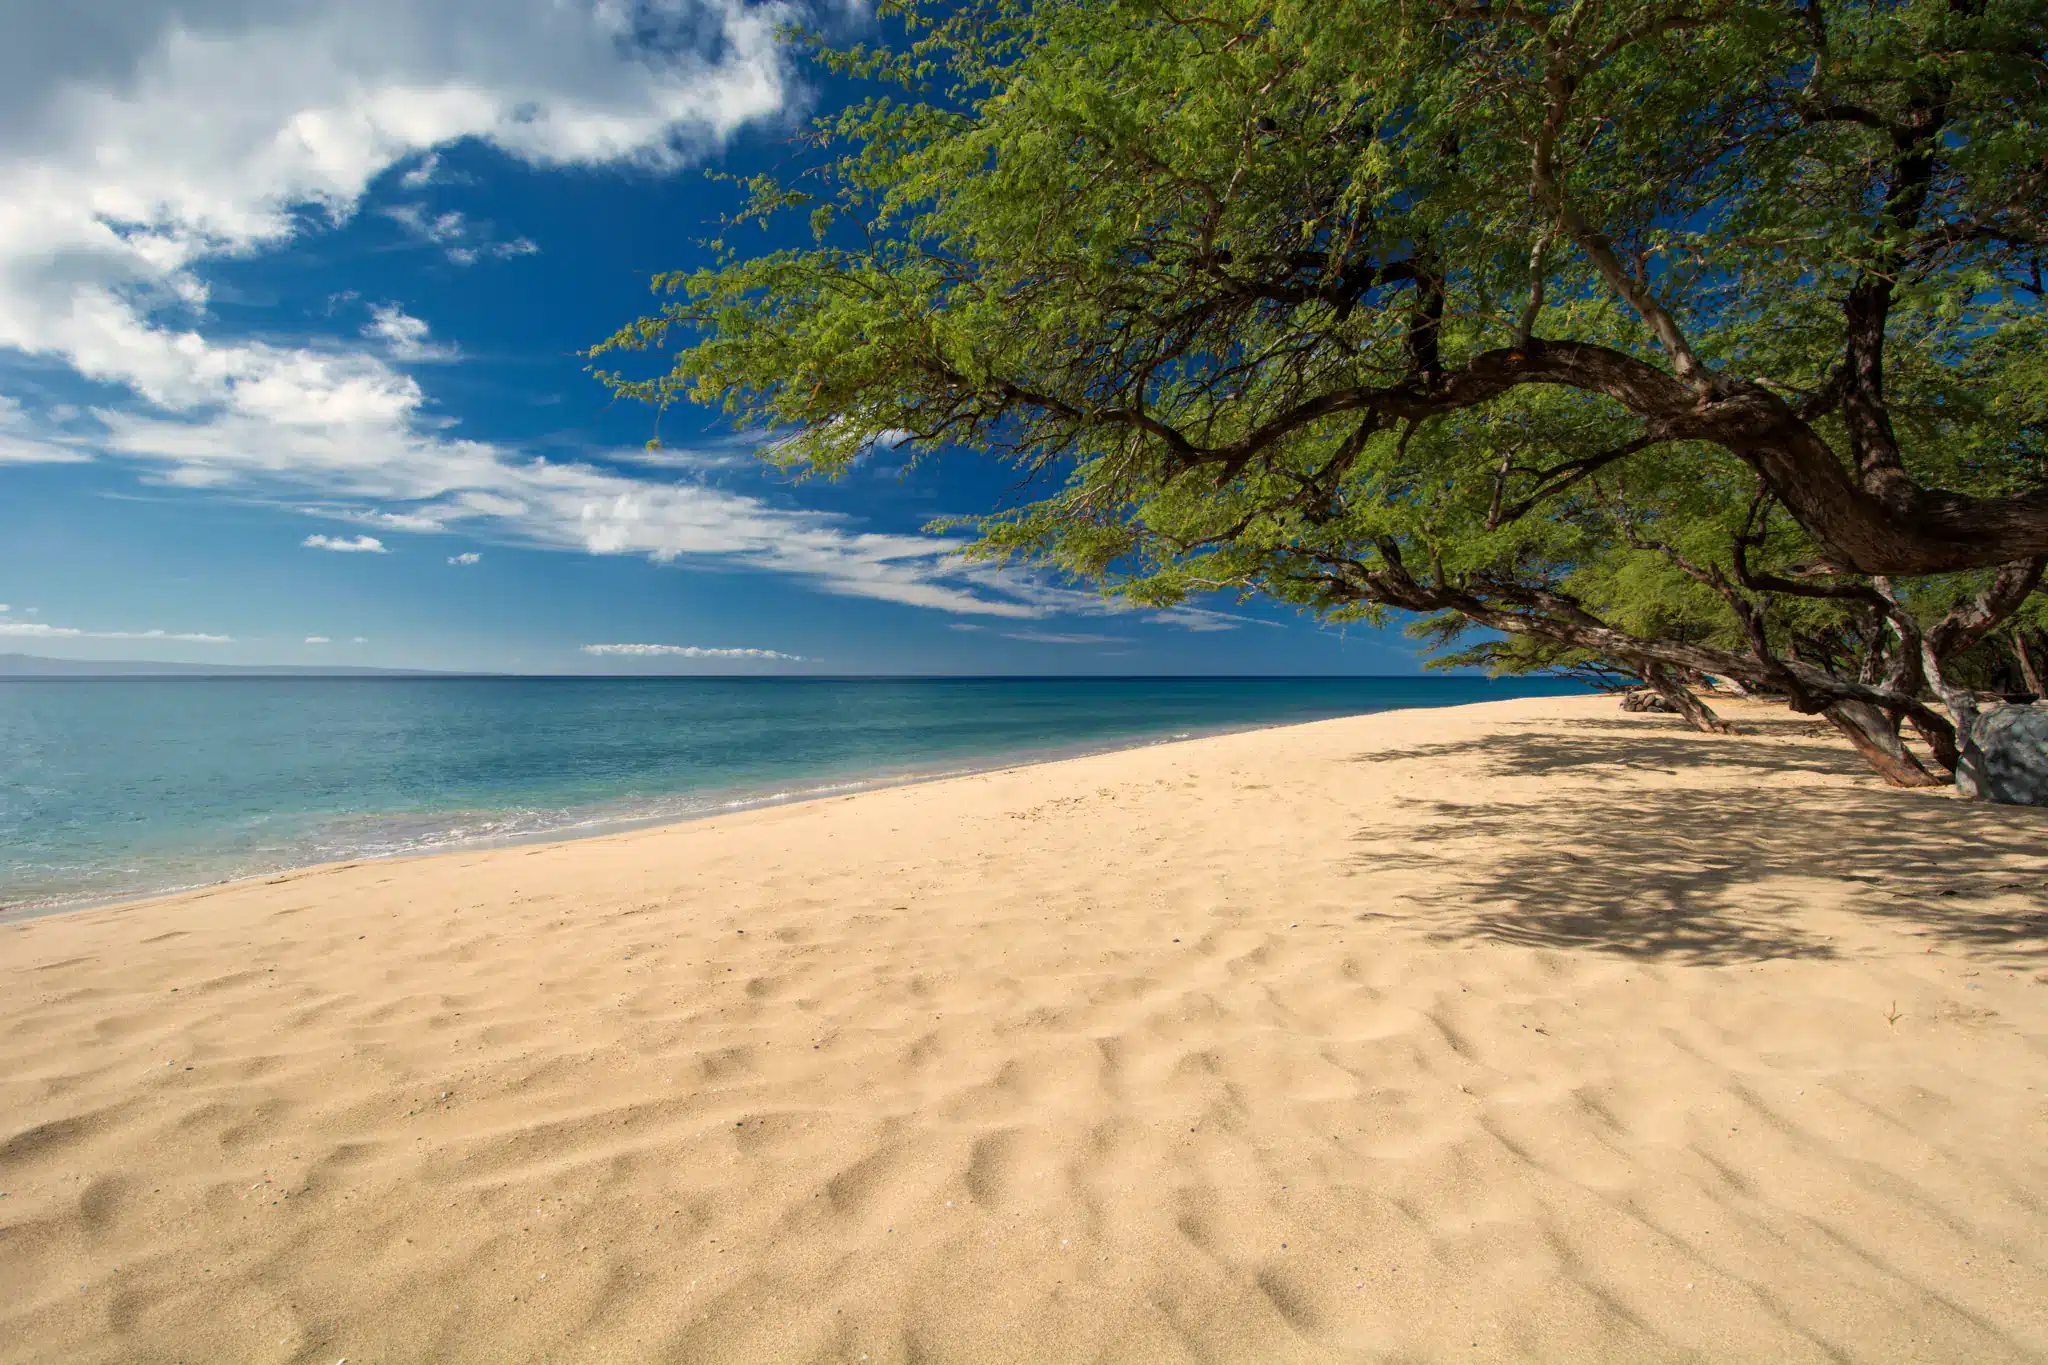 Papalaua Beach Park is a Beach located in the city of Wailuku on Maui, Hawaii